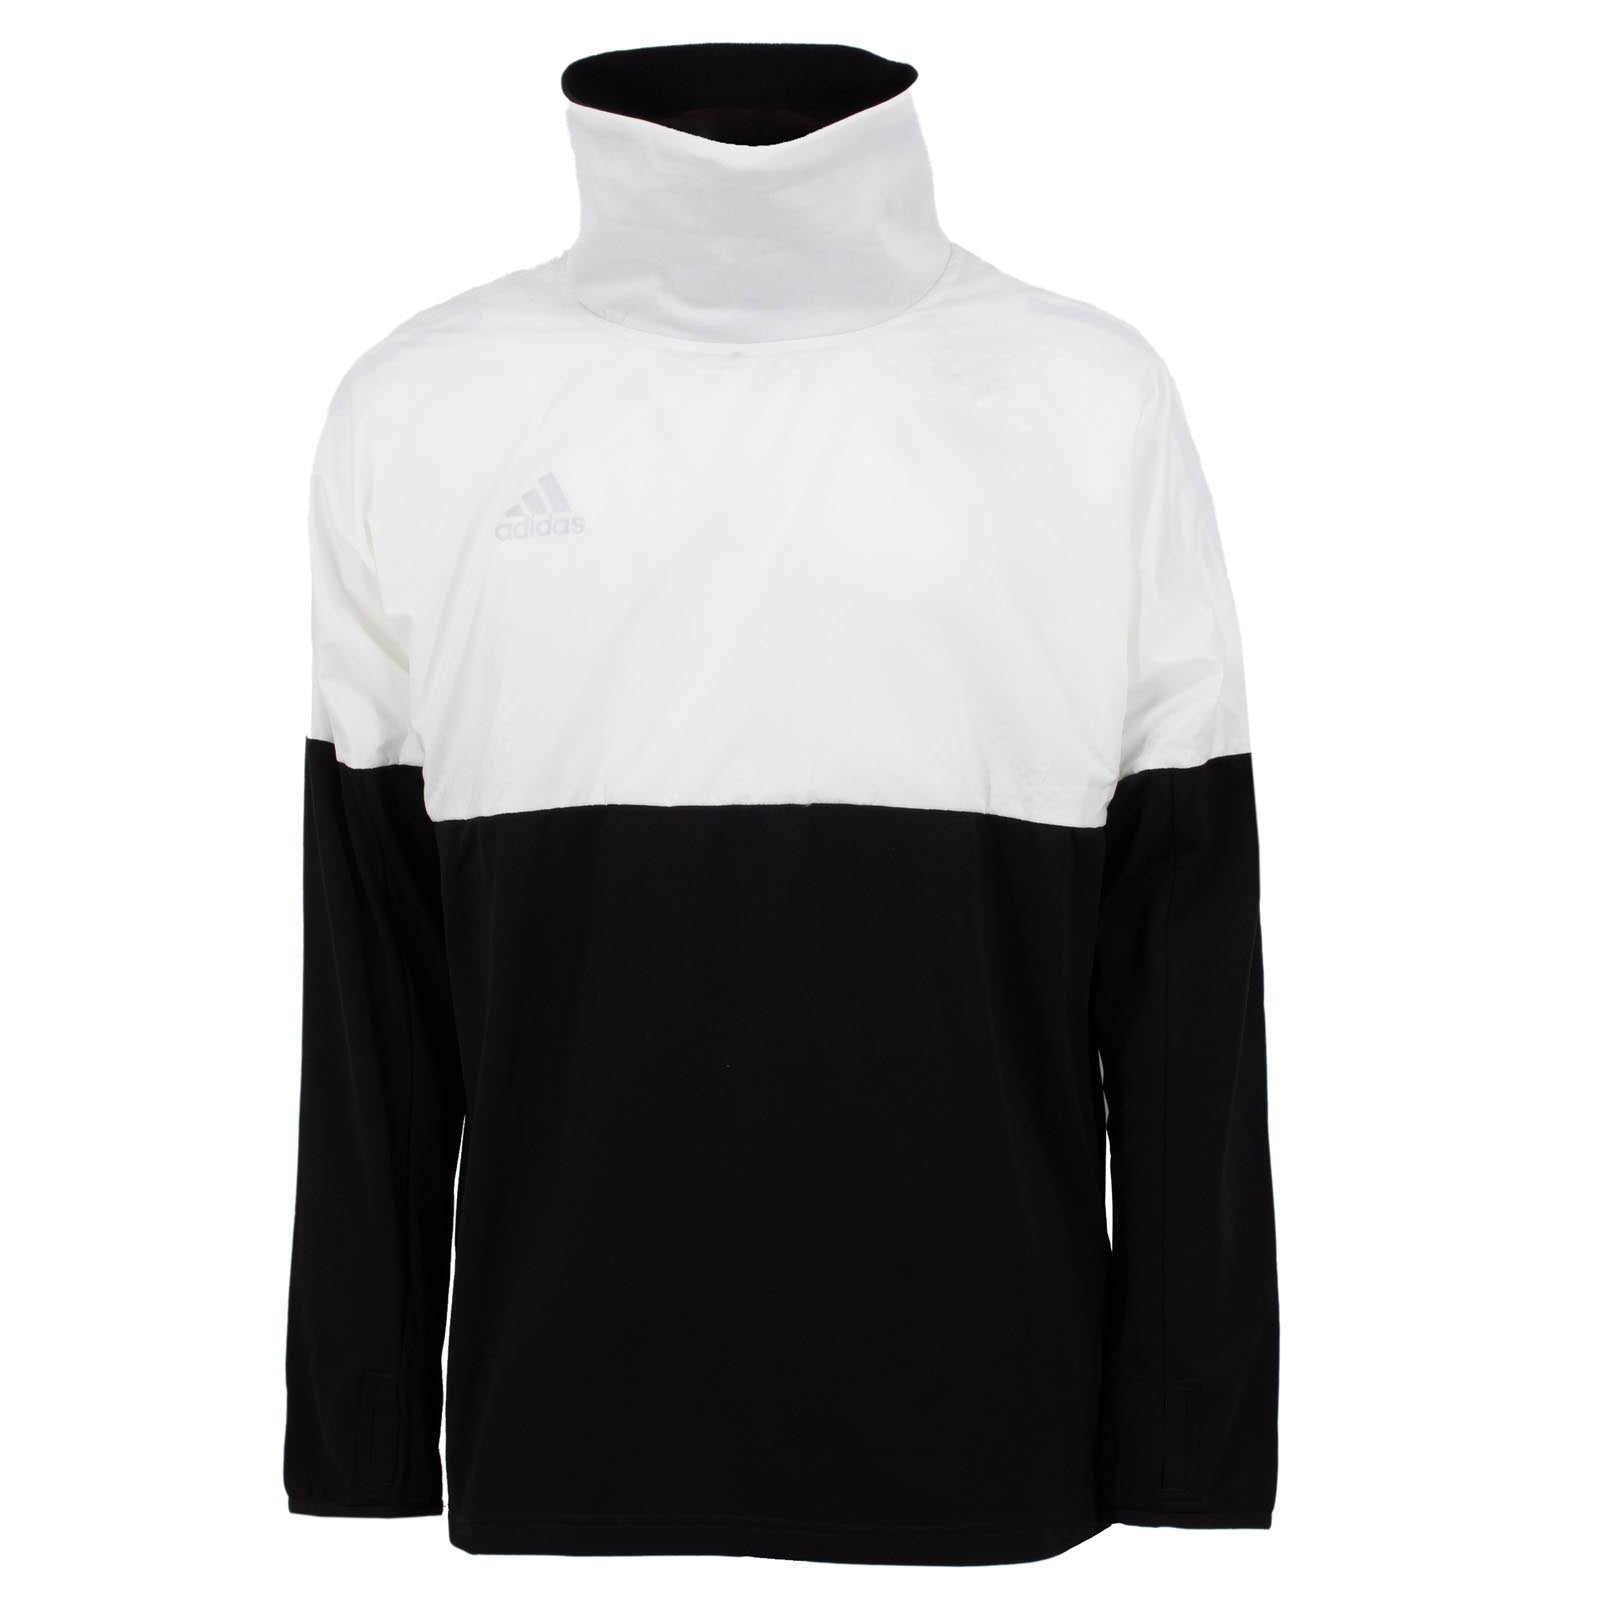 Adidas Tango Hybrid Fussball Top Herren Trainingsshirt Sweatshirt Weiß CE8165 L